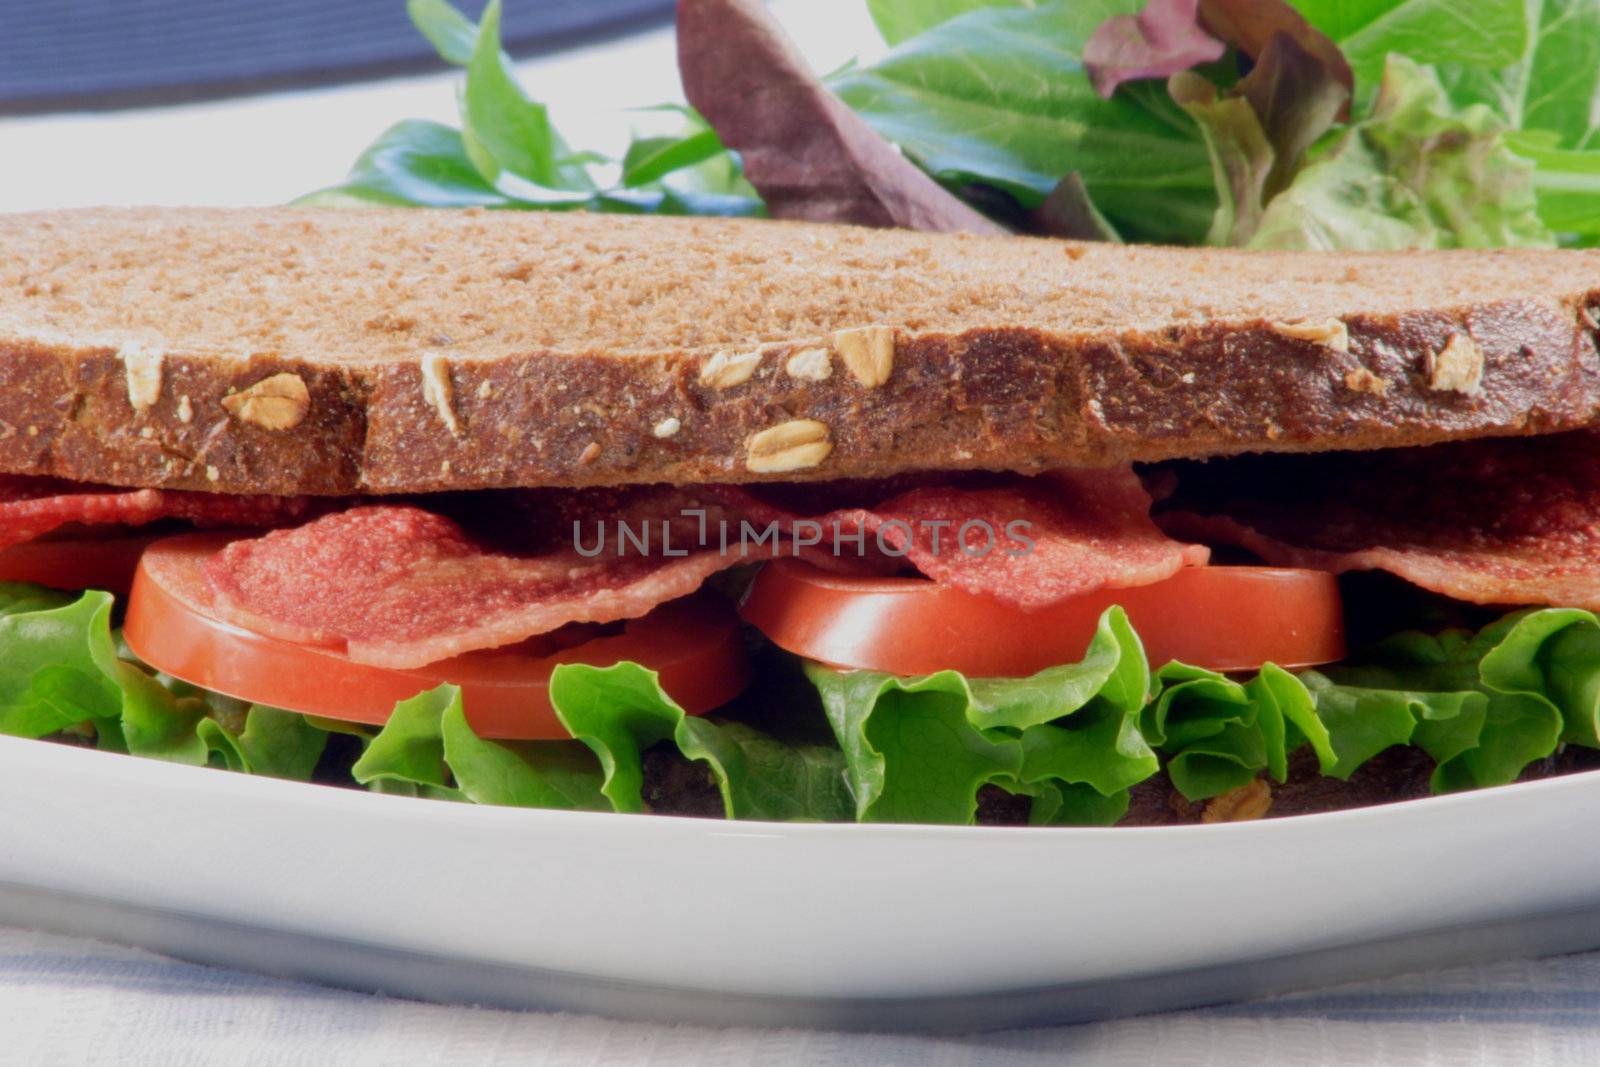 b.l.t wheat bread organic sandwich by tacar